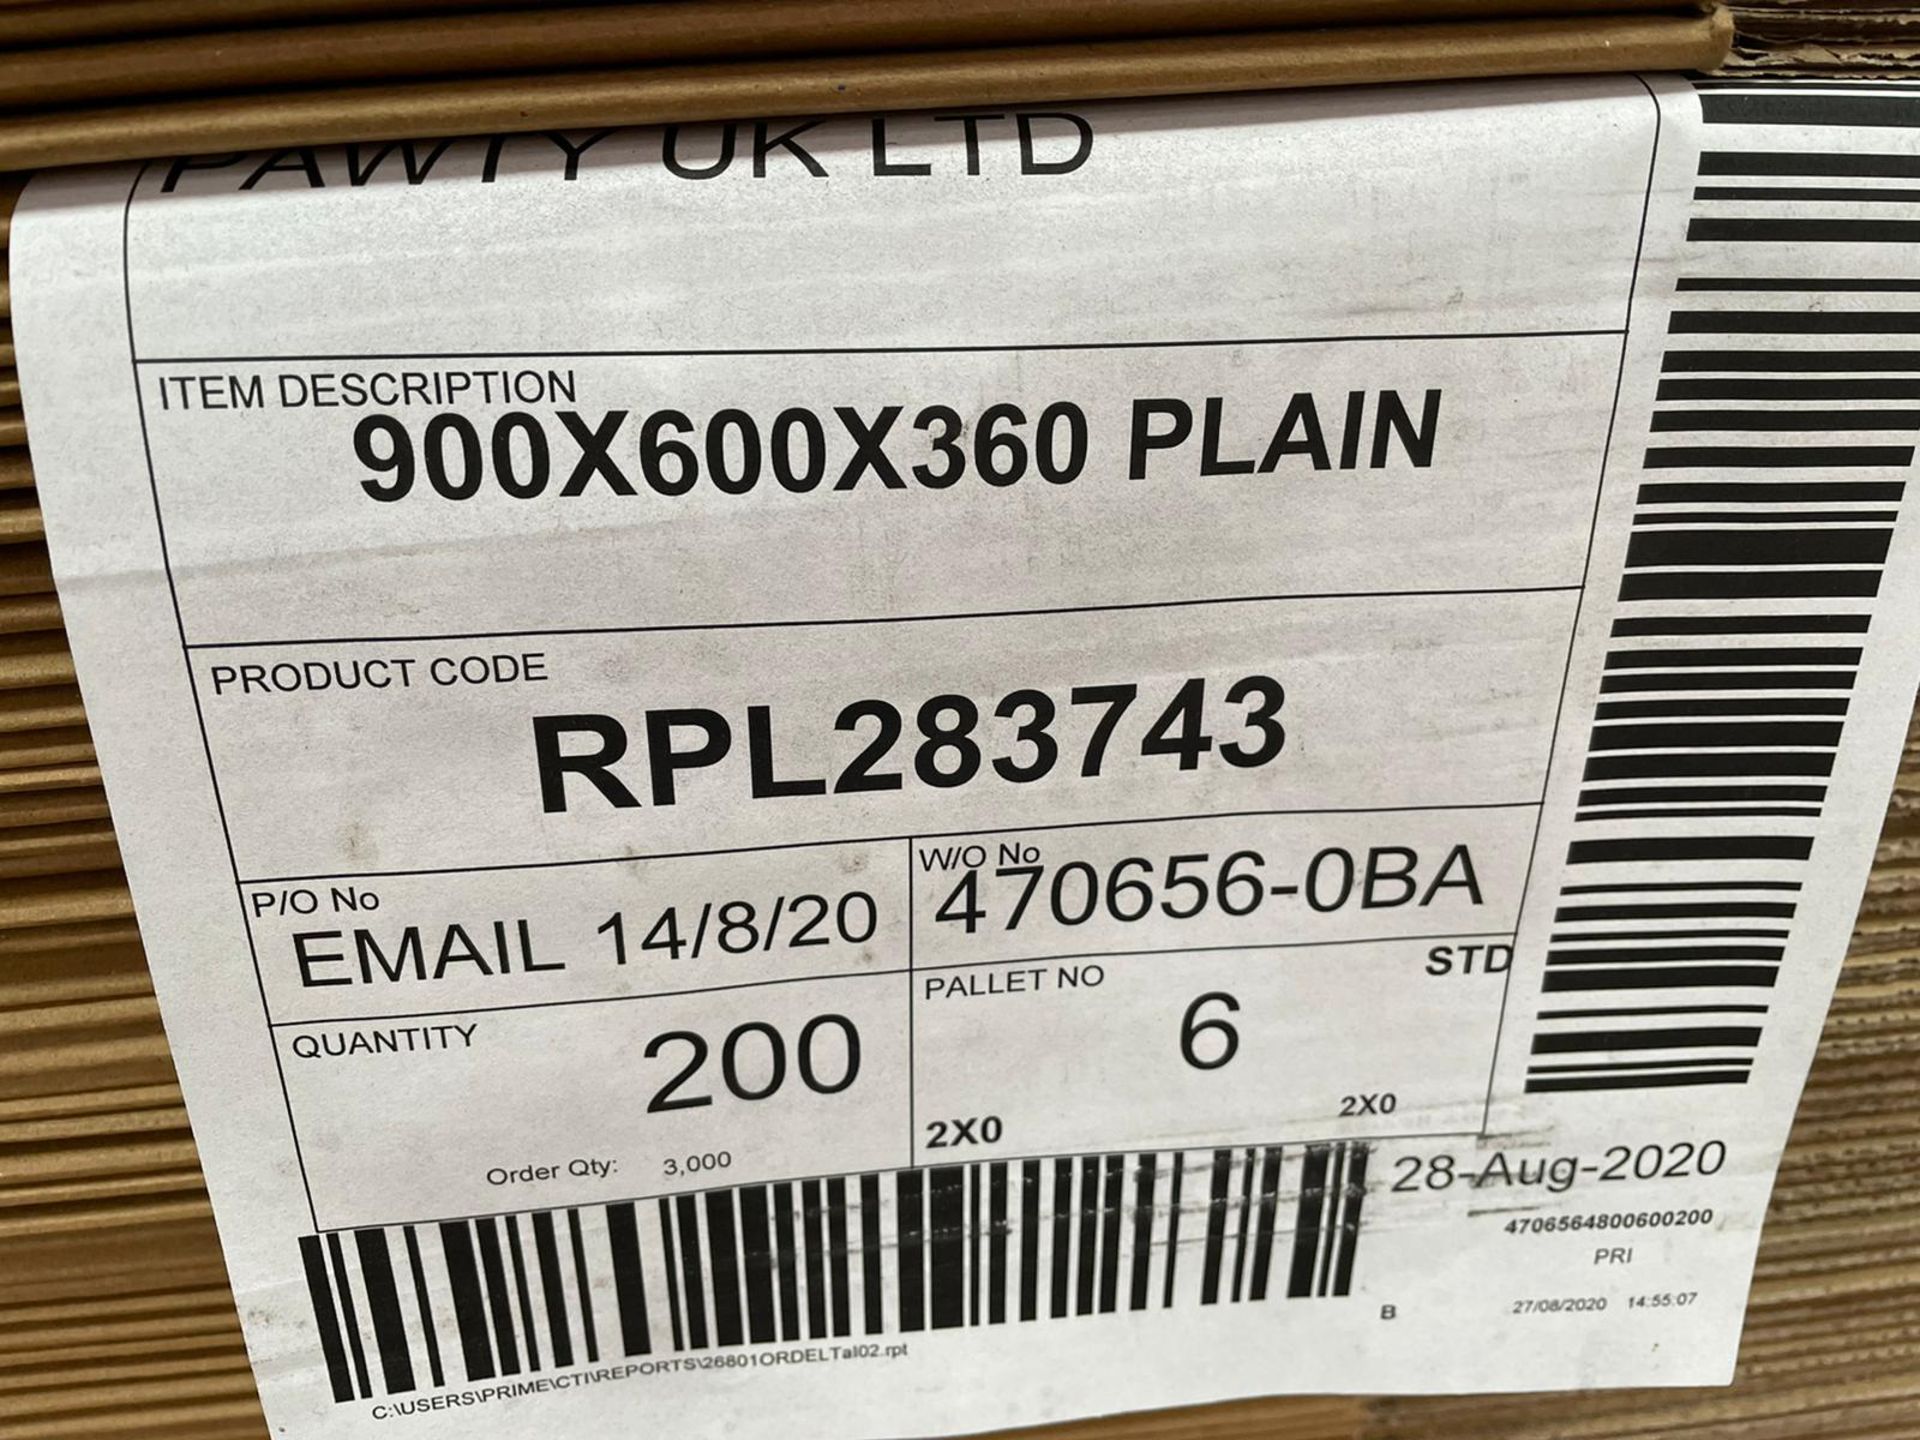 1 x Pallet Cardboard Boxes | 200 pcs | RPL283743 - Image 2 of 3